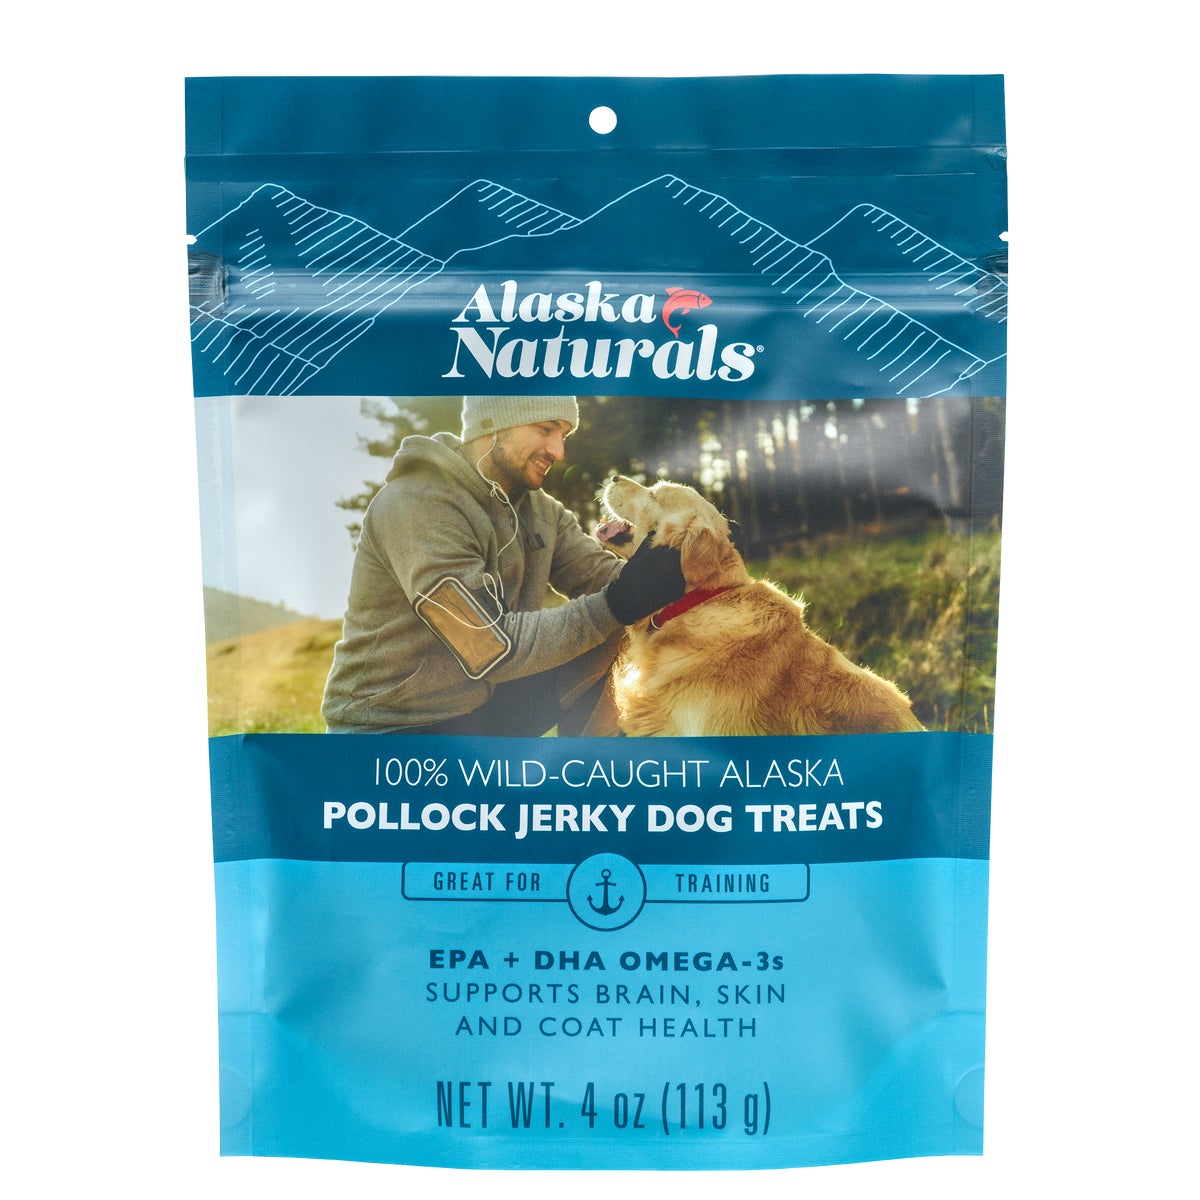 Wild-Caught Alaska Pollock Jerky Dog Treats